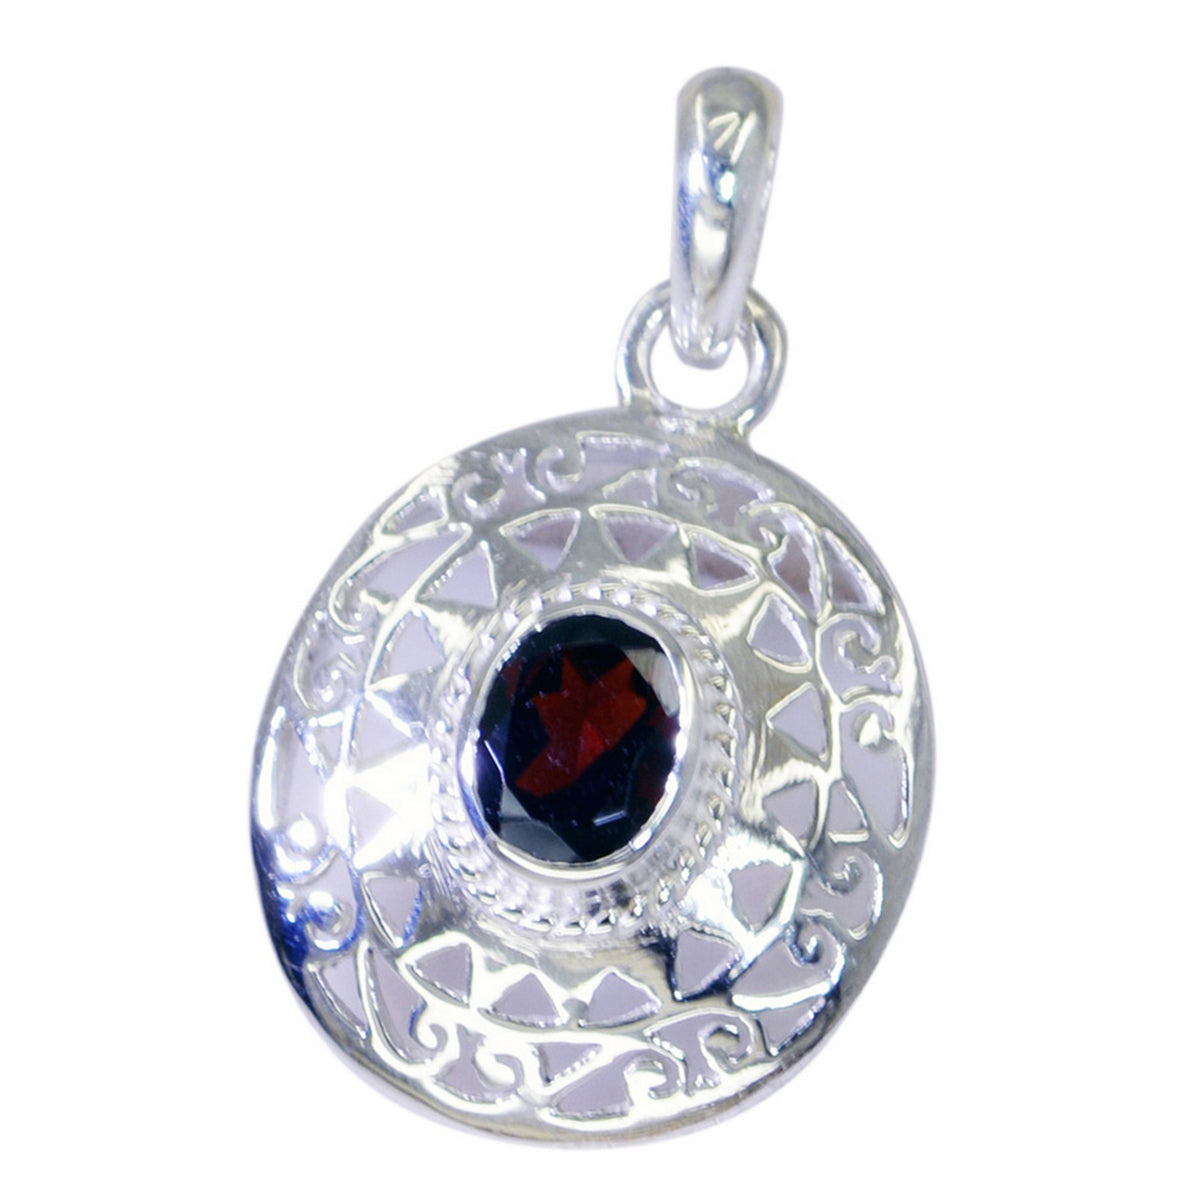 Riyo Good Gemstones Oval Faceted Red Garnet Sterling Silver Pendant gift for friend